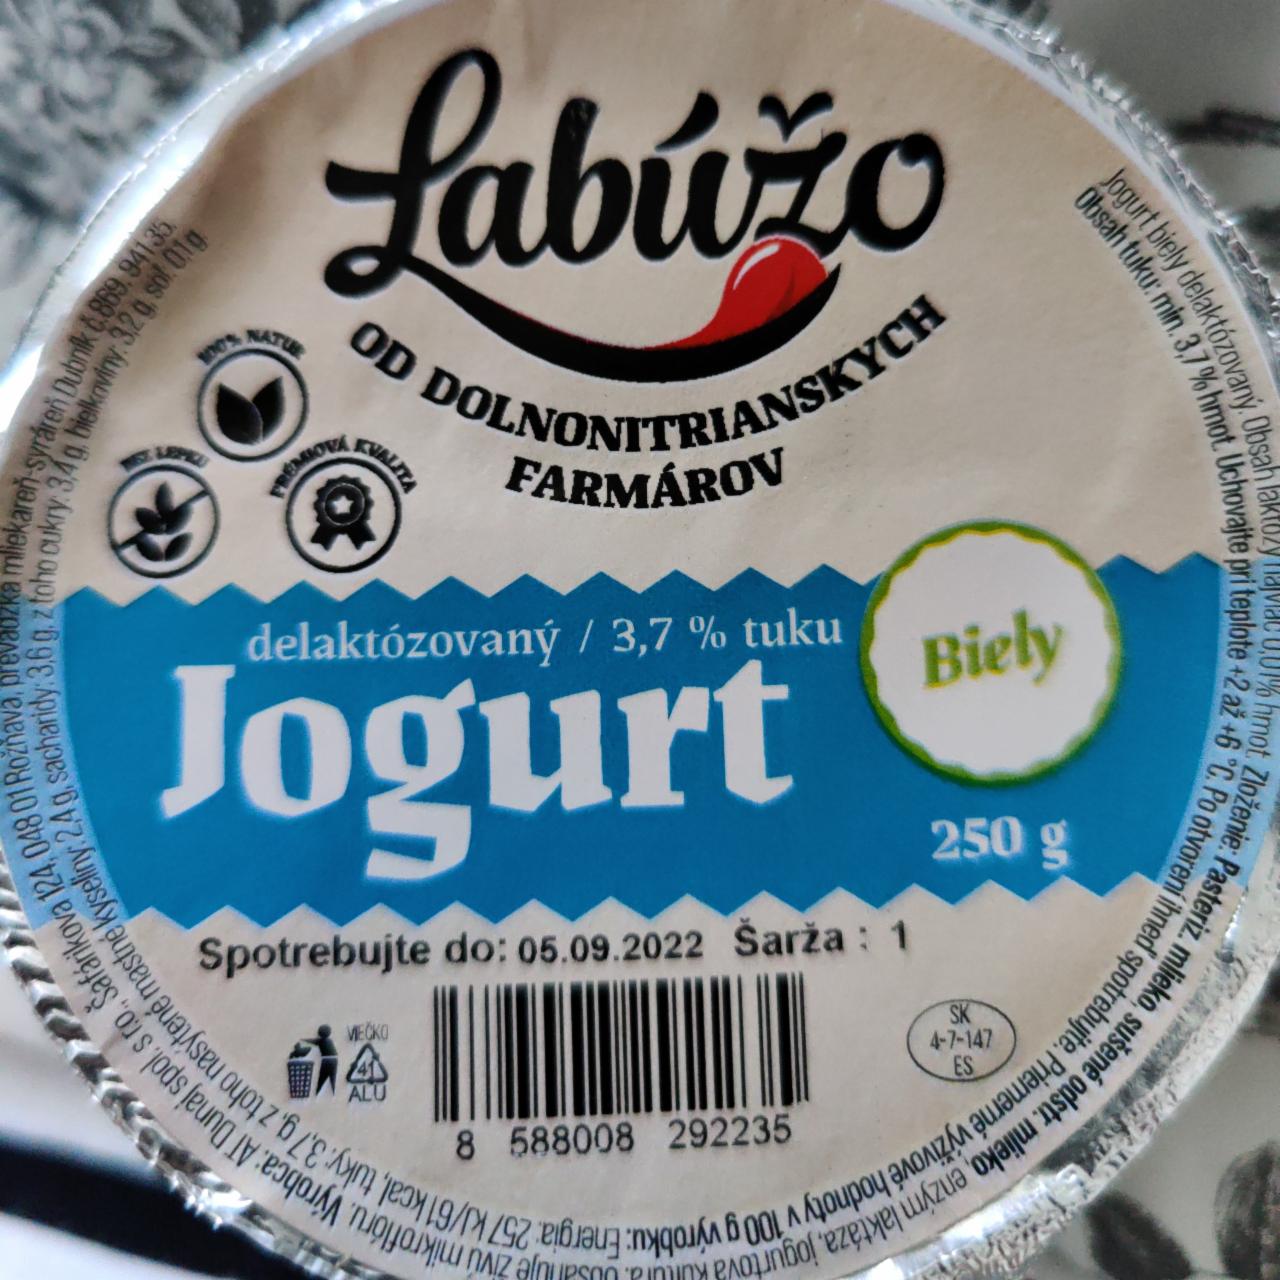 Fotografie - Delaktózovaný jogurt Biely 3,7% tuku Labúžo